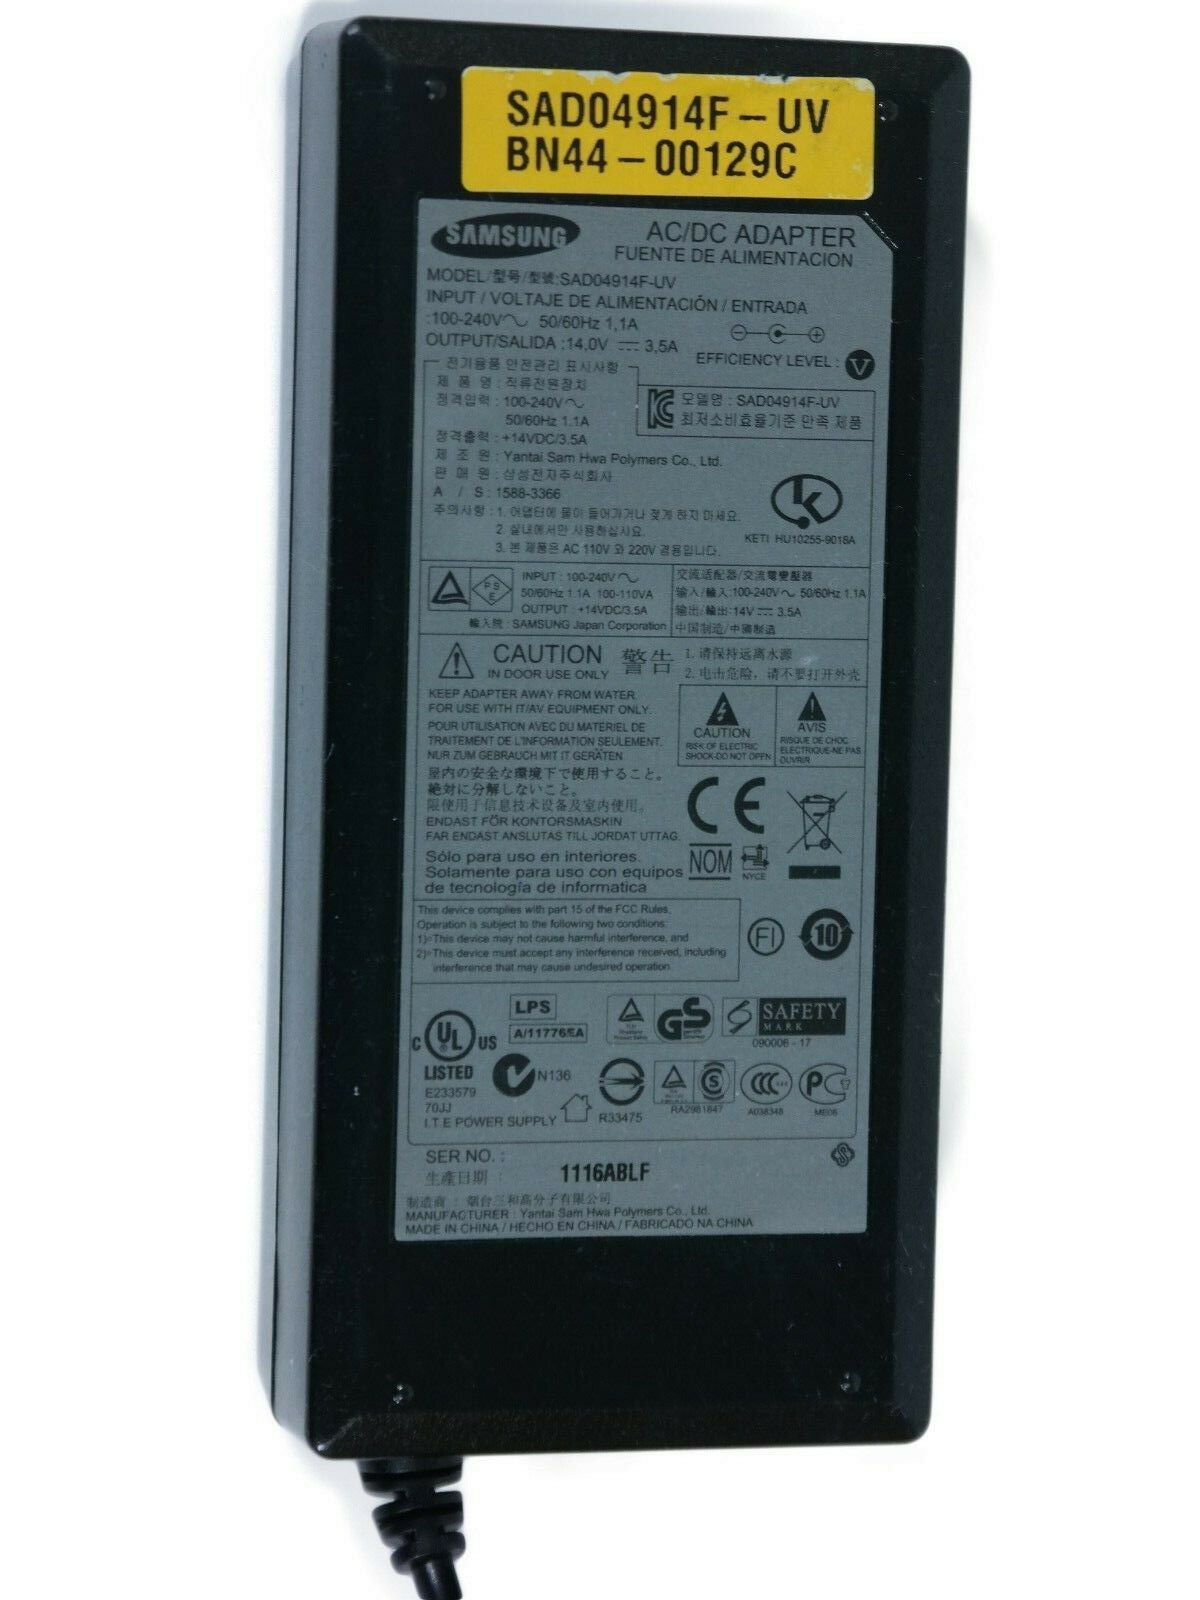 NEW 14.0V 3.5A AC Adapter Power Supply for Samsung SAD04914F-UV LCD monitor - Click Image to Close